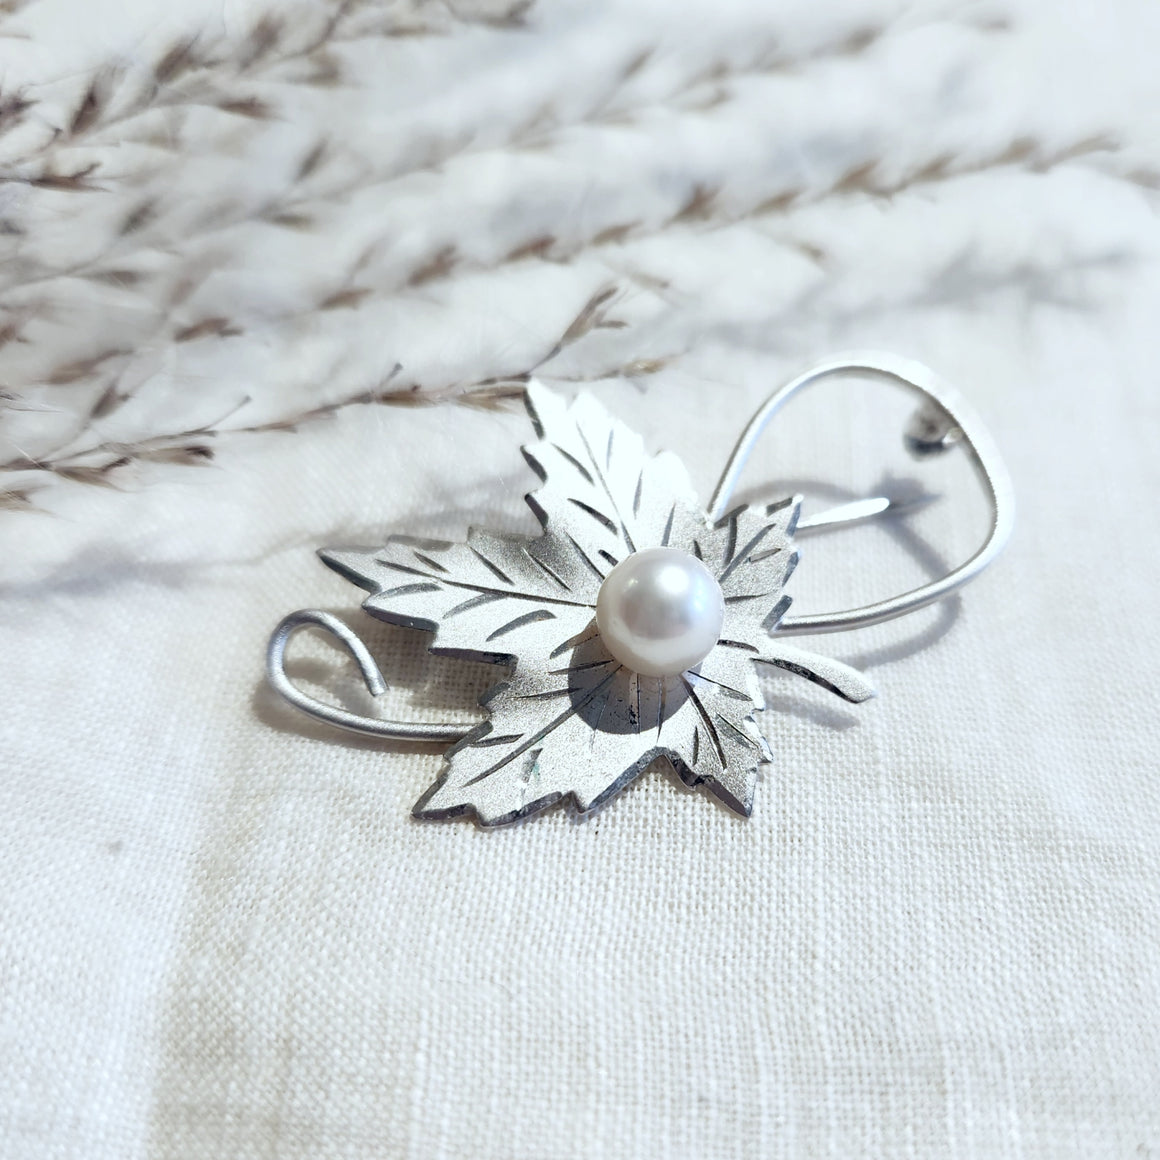 Maple Leaf sterling silver cp brooch